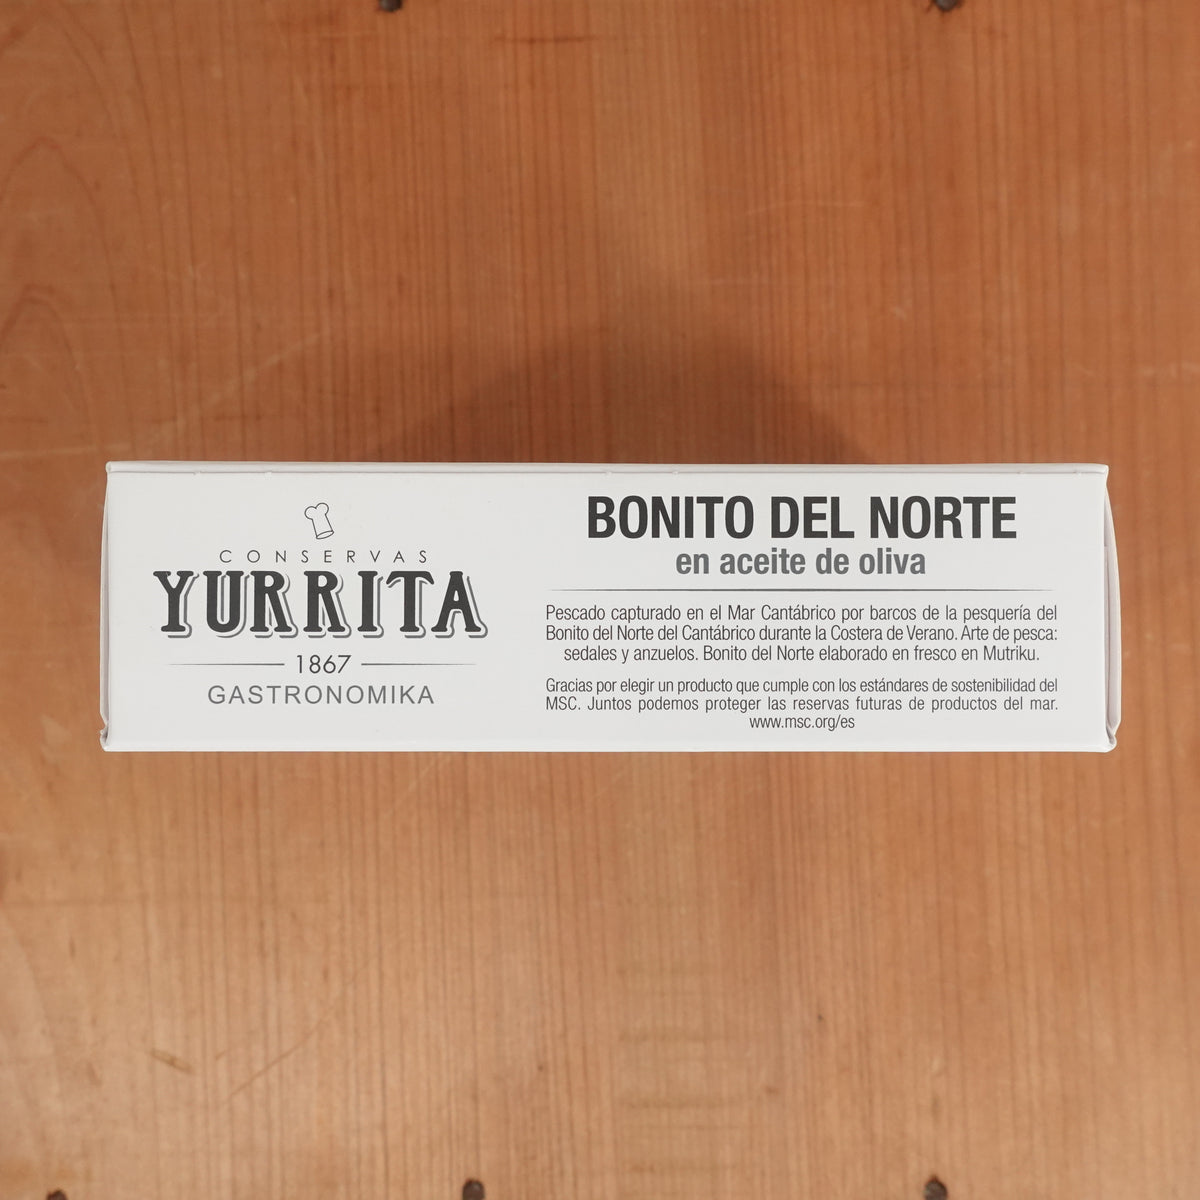 Yurrita White Tuna in Olive Oil - 111g